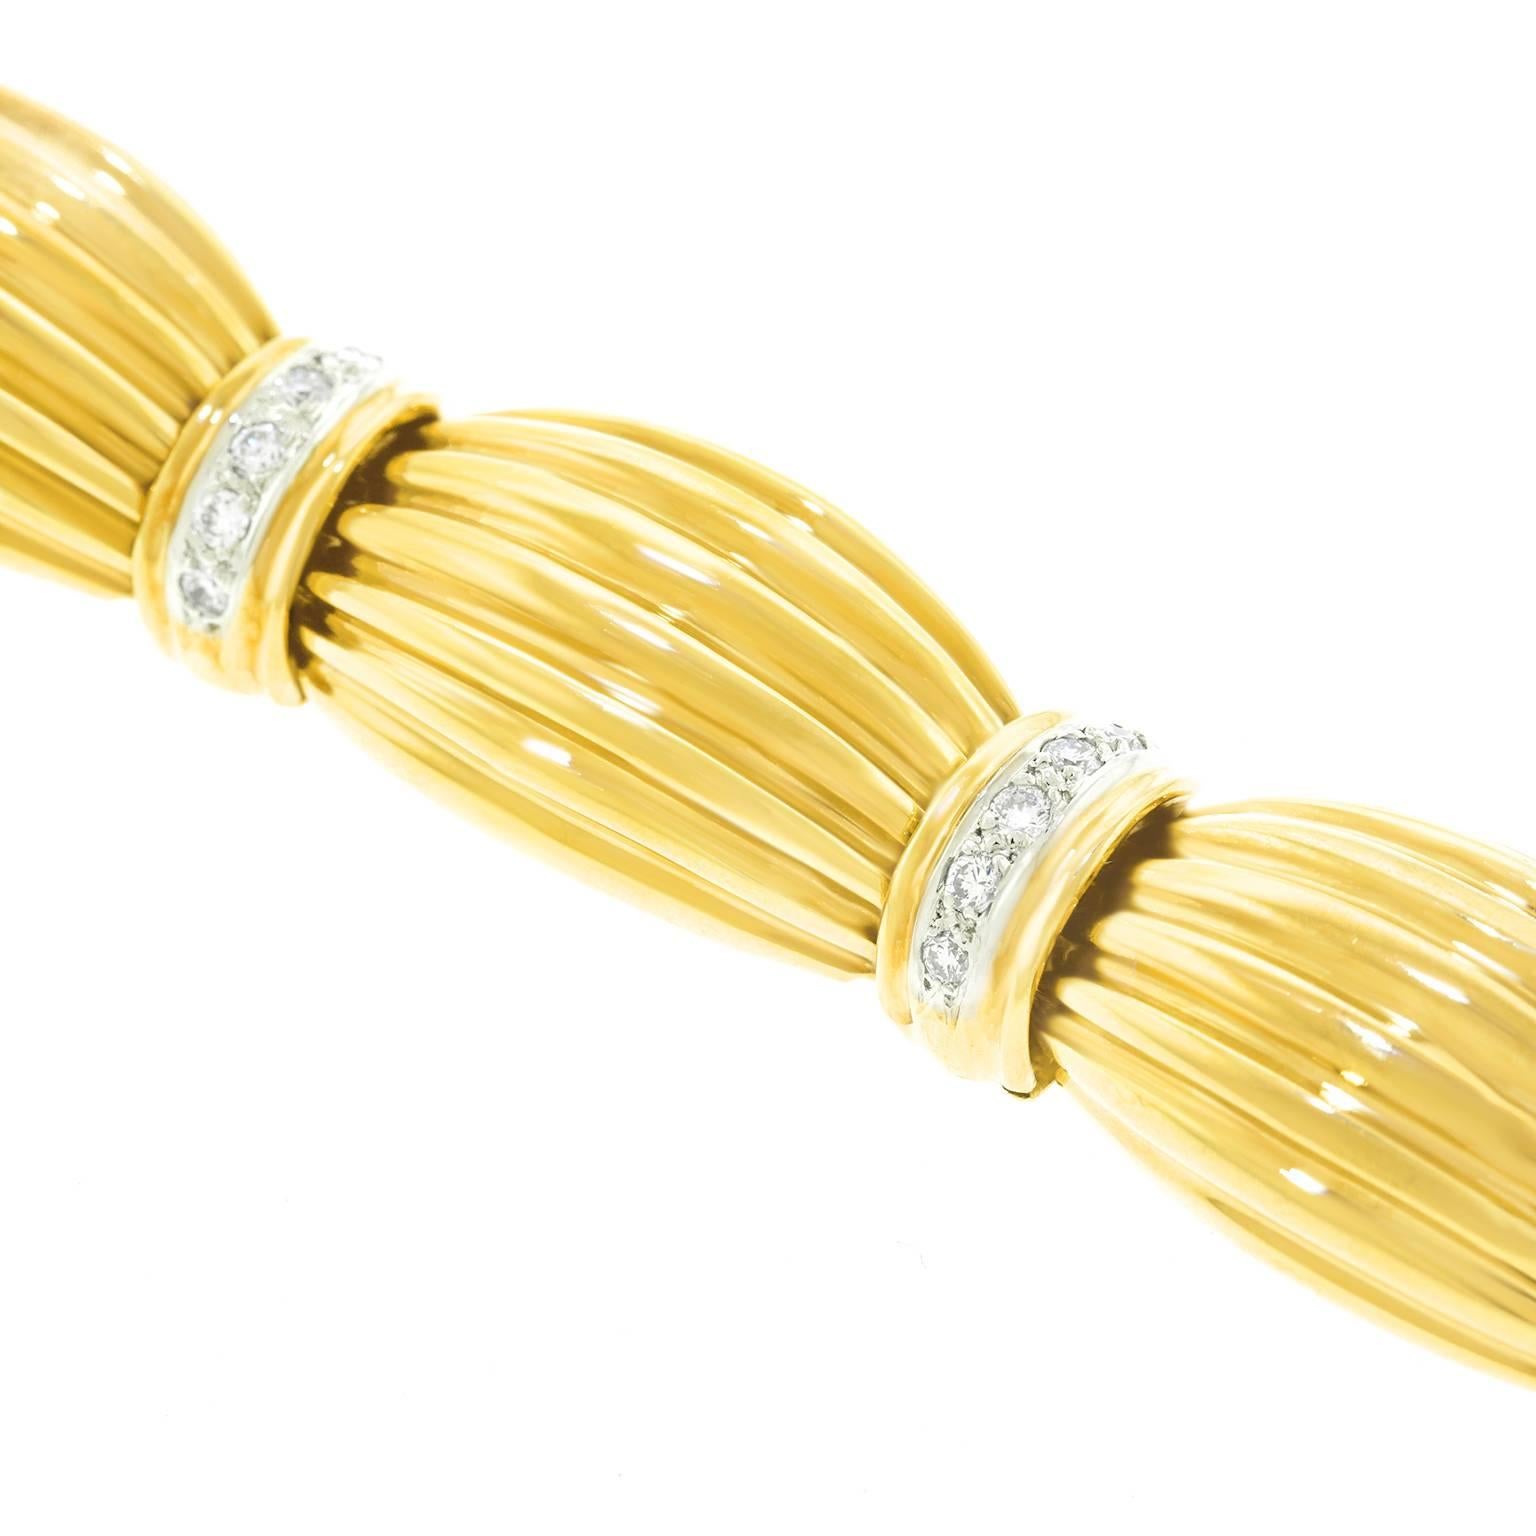 O. J. Perrin of Paris Diamond Set Gold Bracelet 2